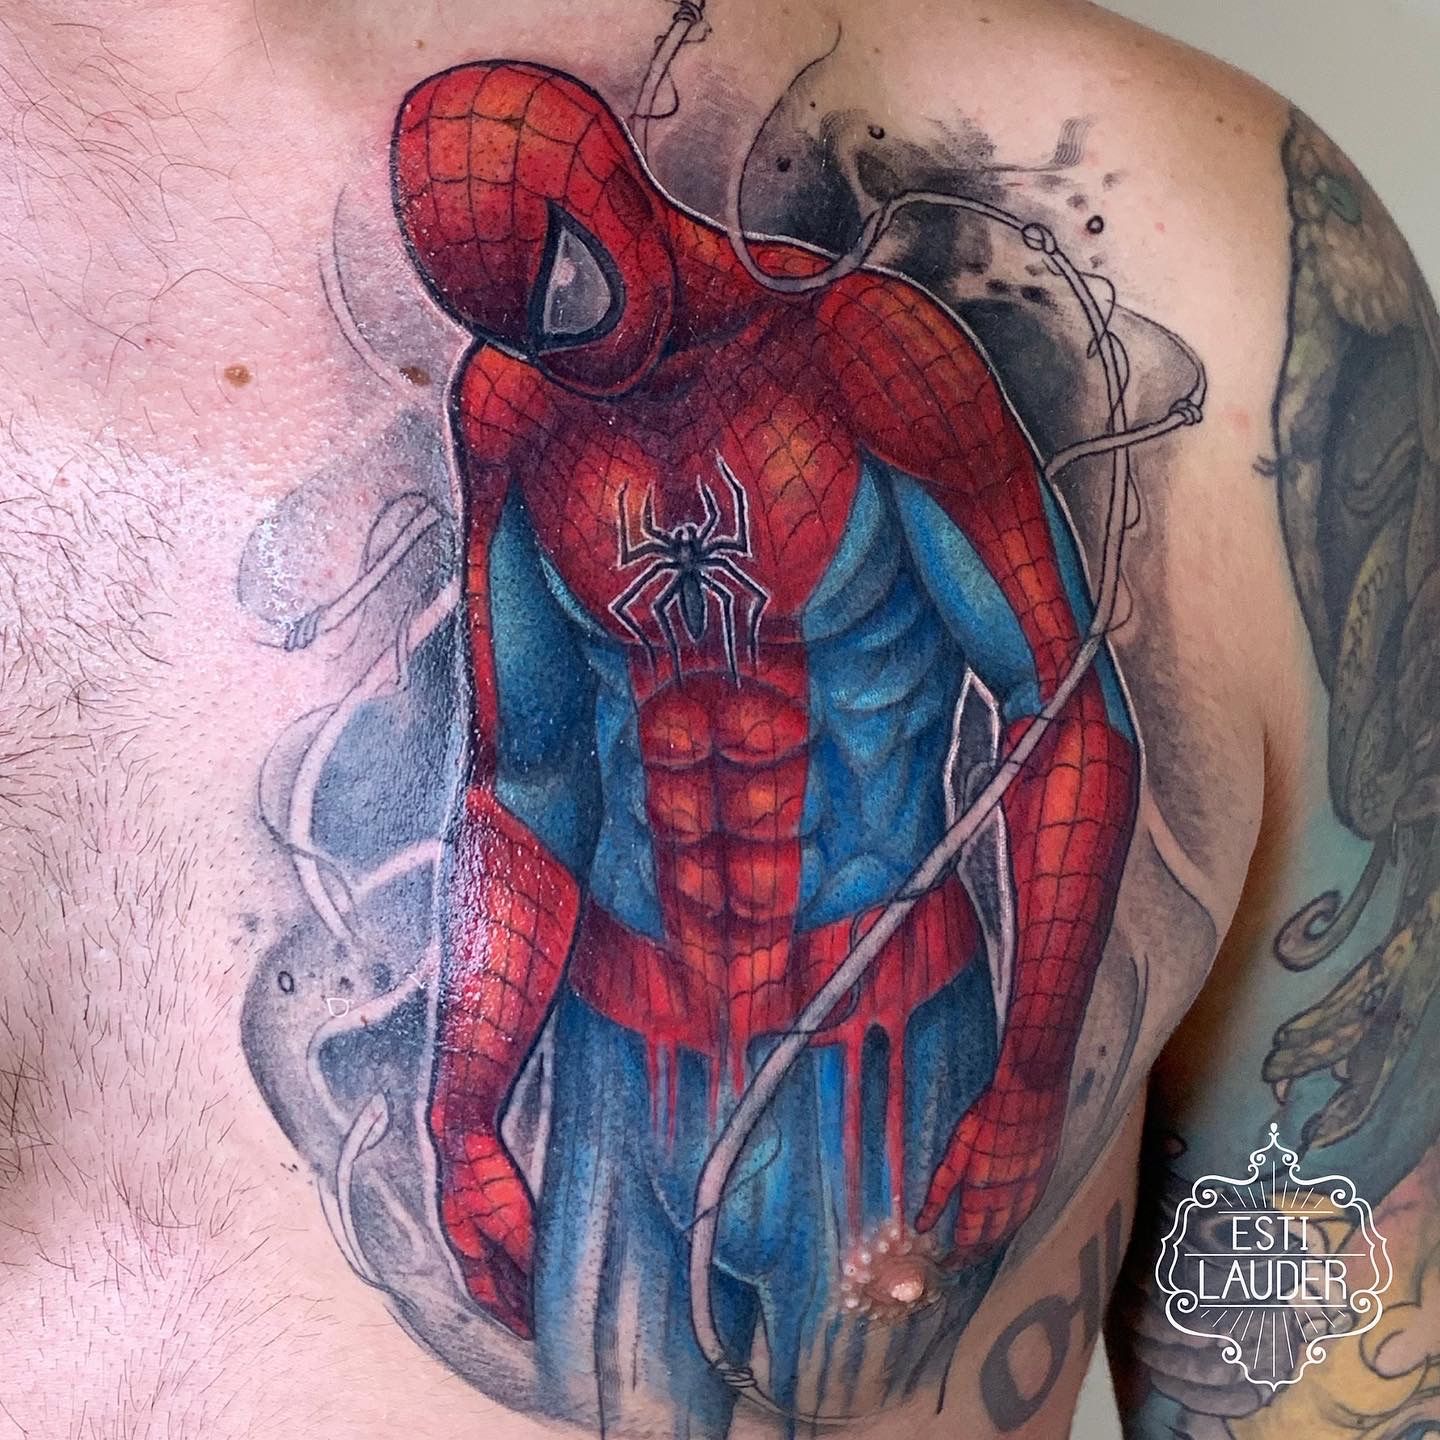 Art on Tumblr: Amazing artist Dave Paulo @davepaulo_tattooartist awesome  Spider-Man city scape thigh tattoo!